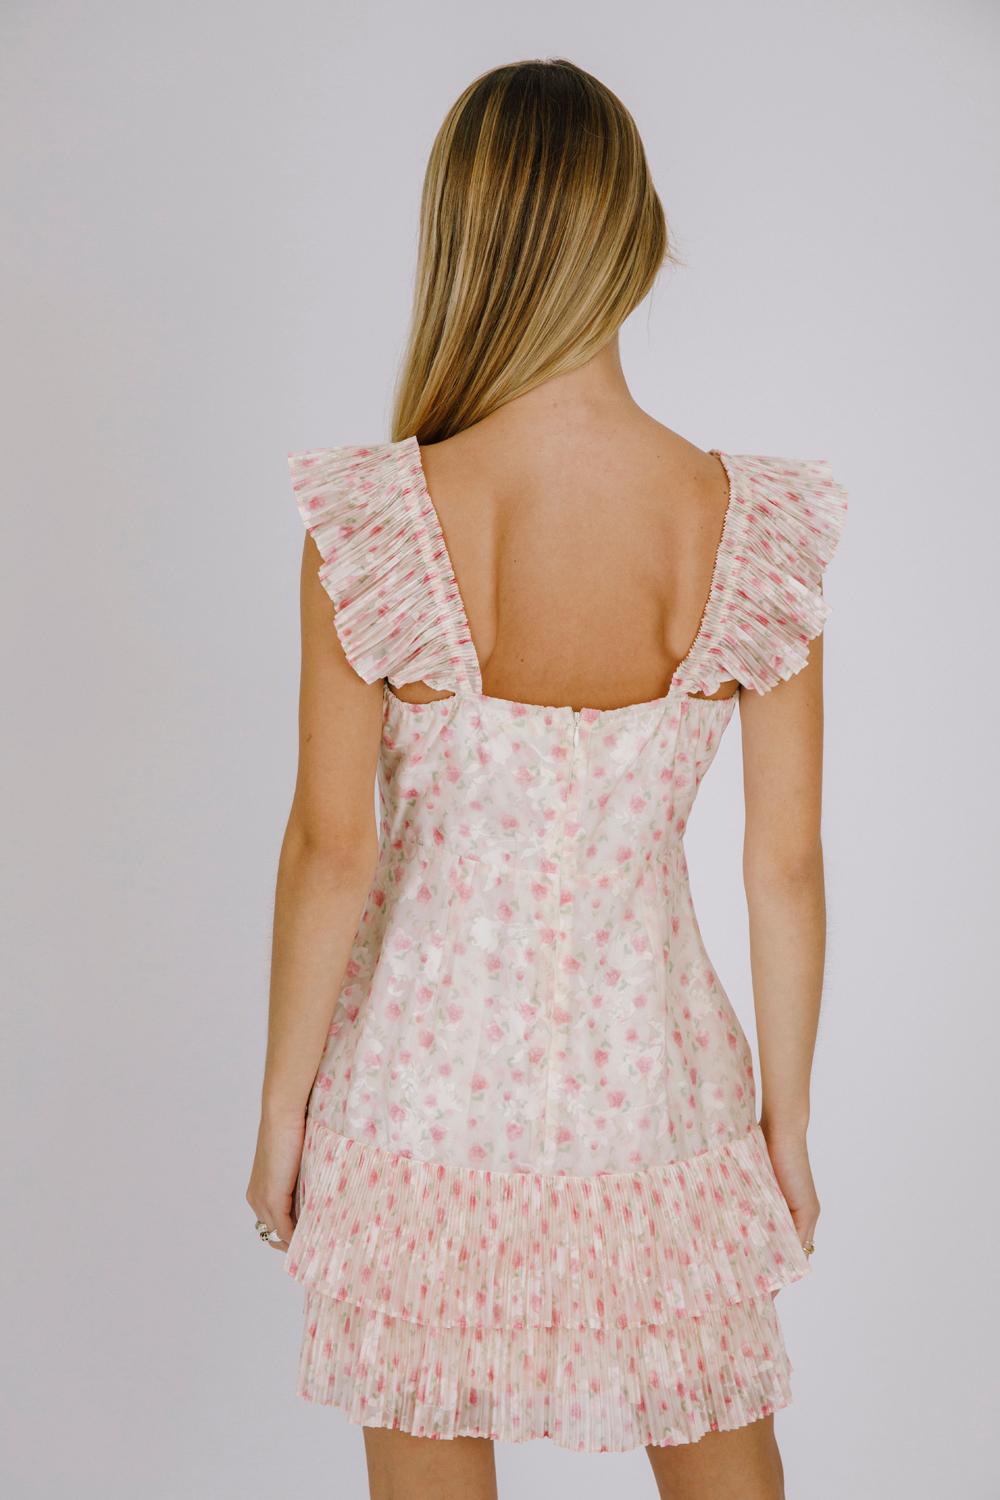 Cream Pink Floral Dress